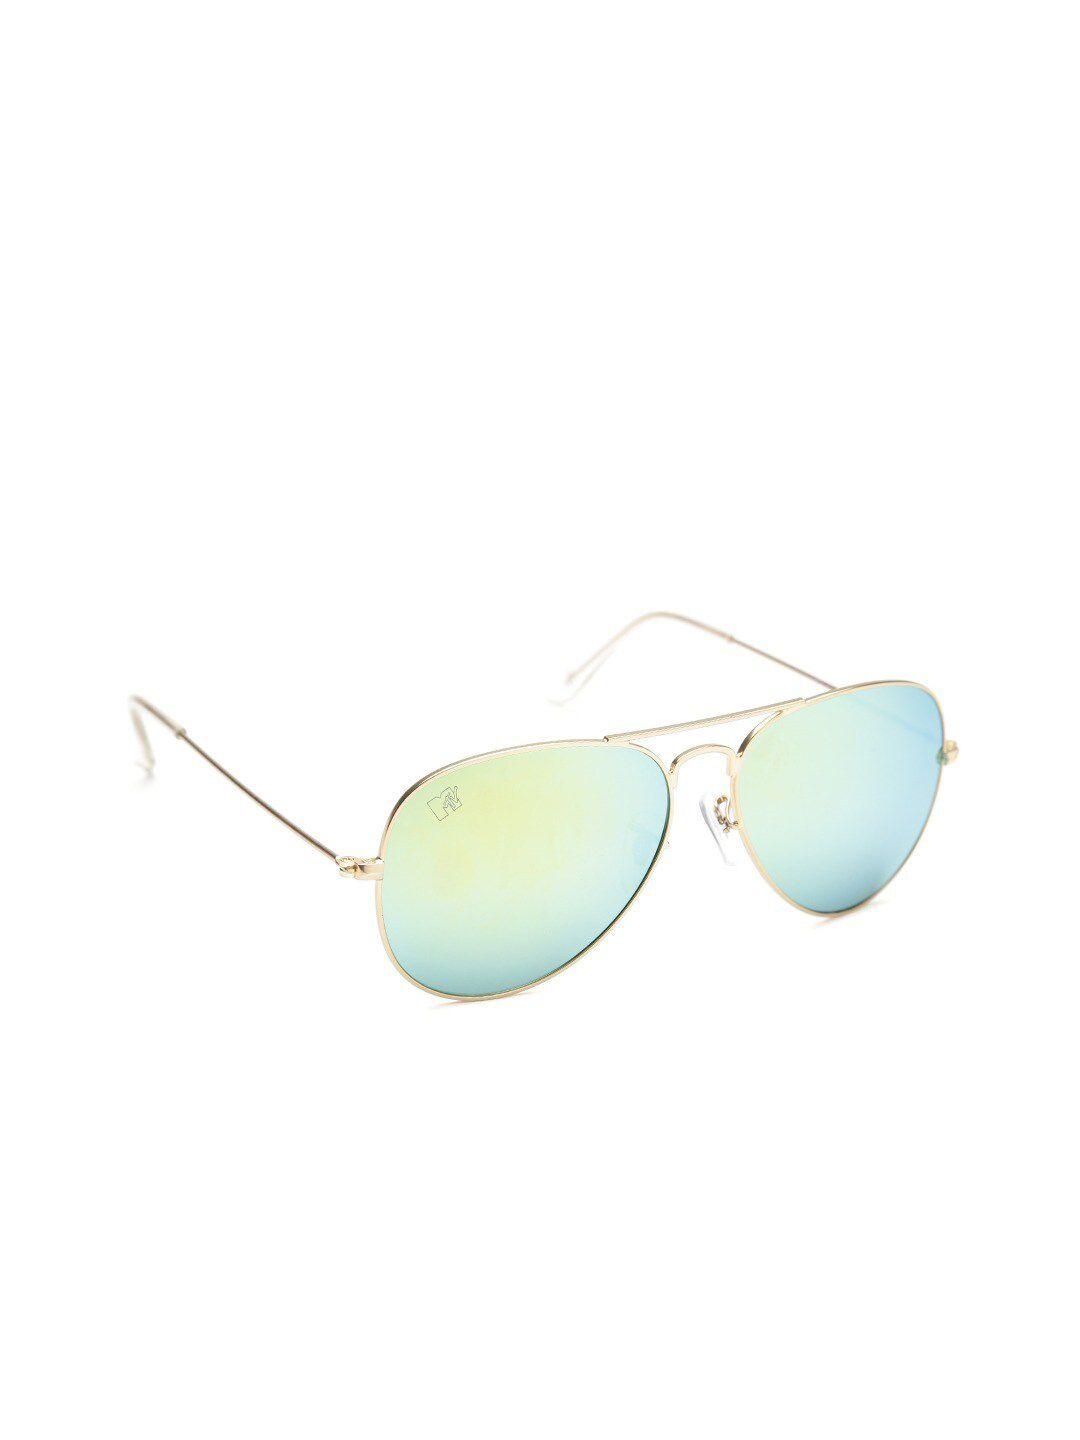 mtv unisex grey lens & gold-toned aviator sunglasses with uv protected lens-mtv-123-c19